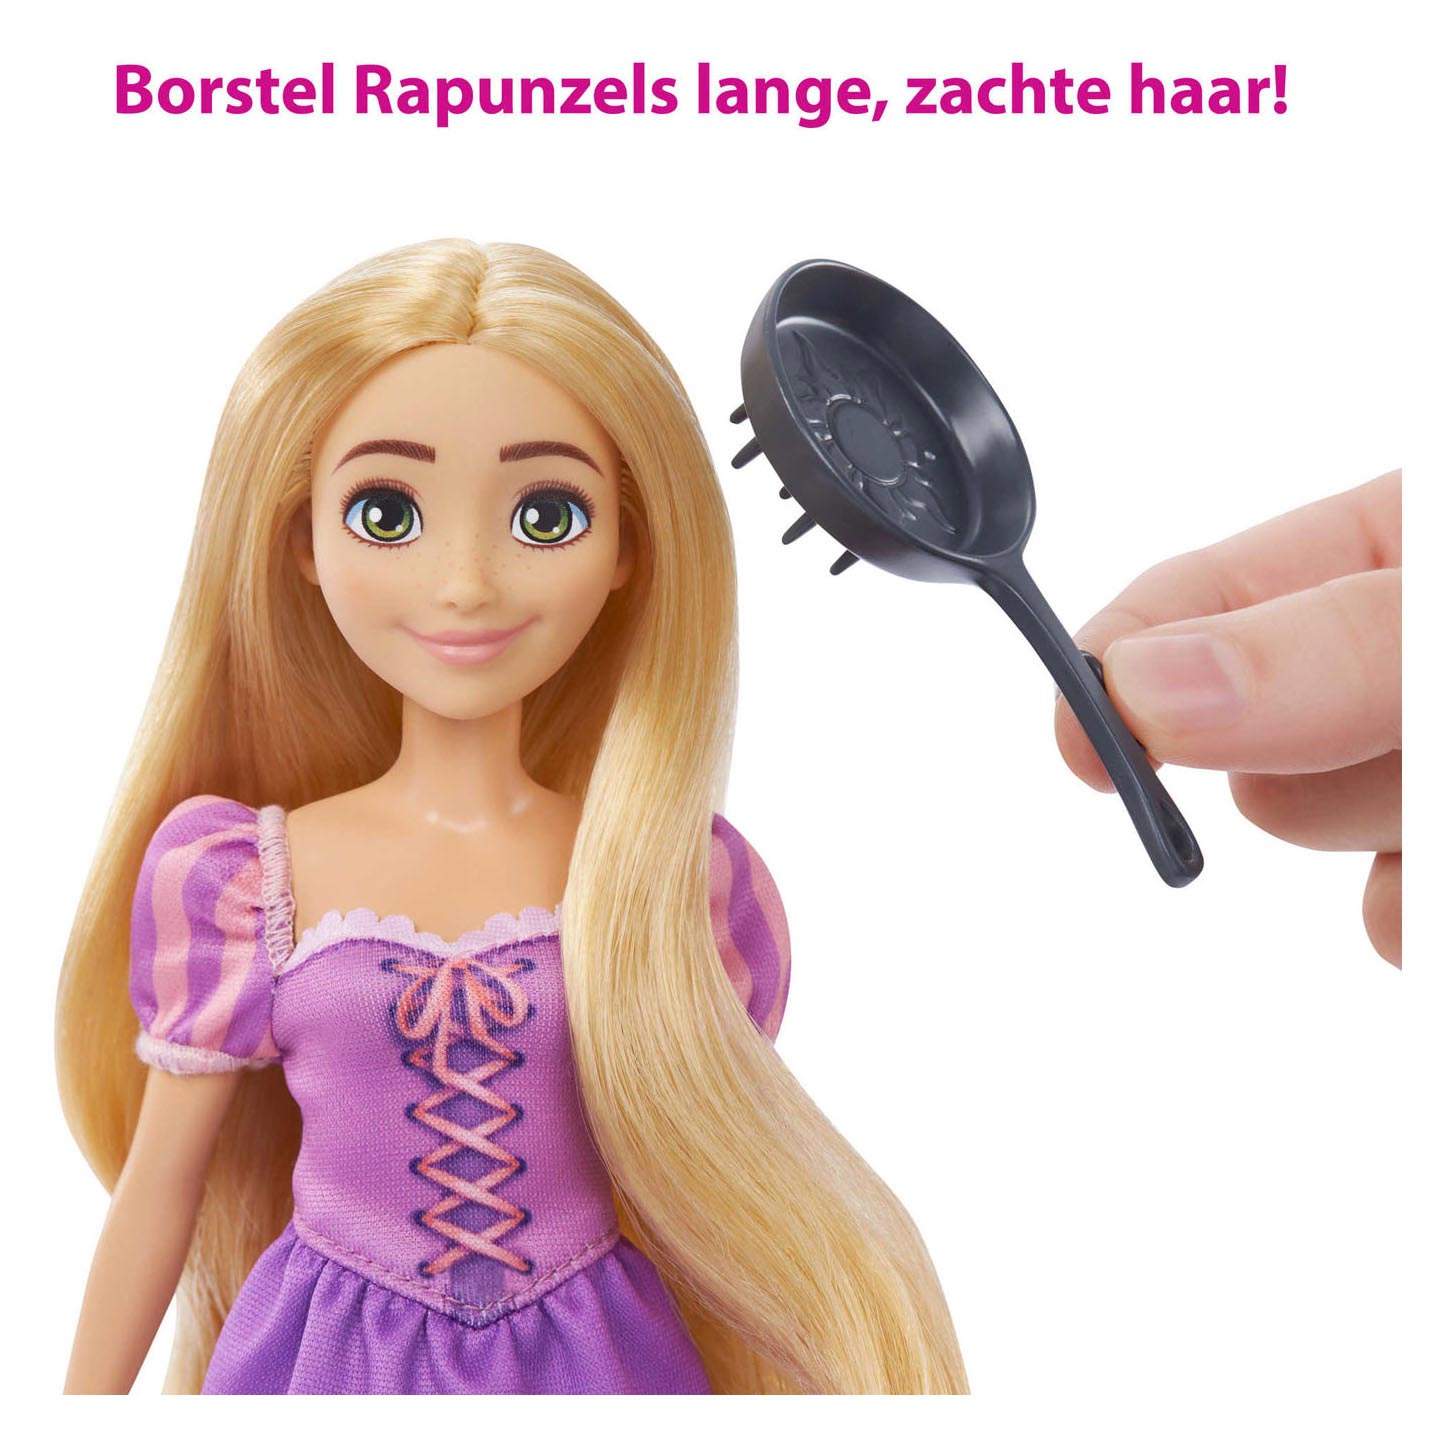 Disney Prinses Pop - Rapunzel en Maximus